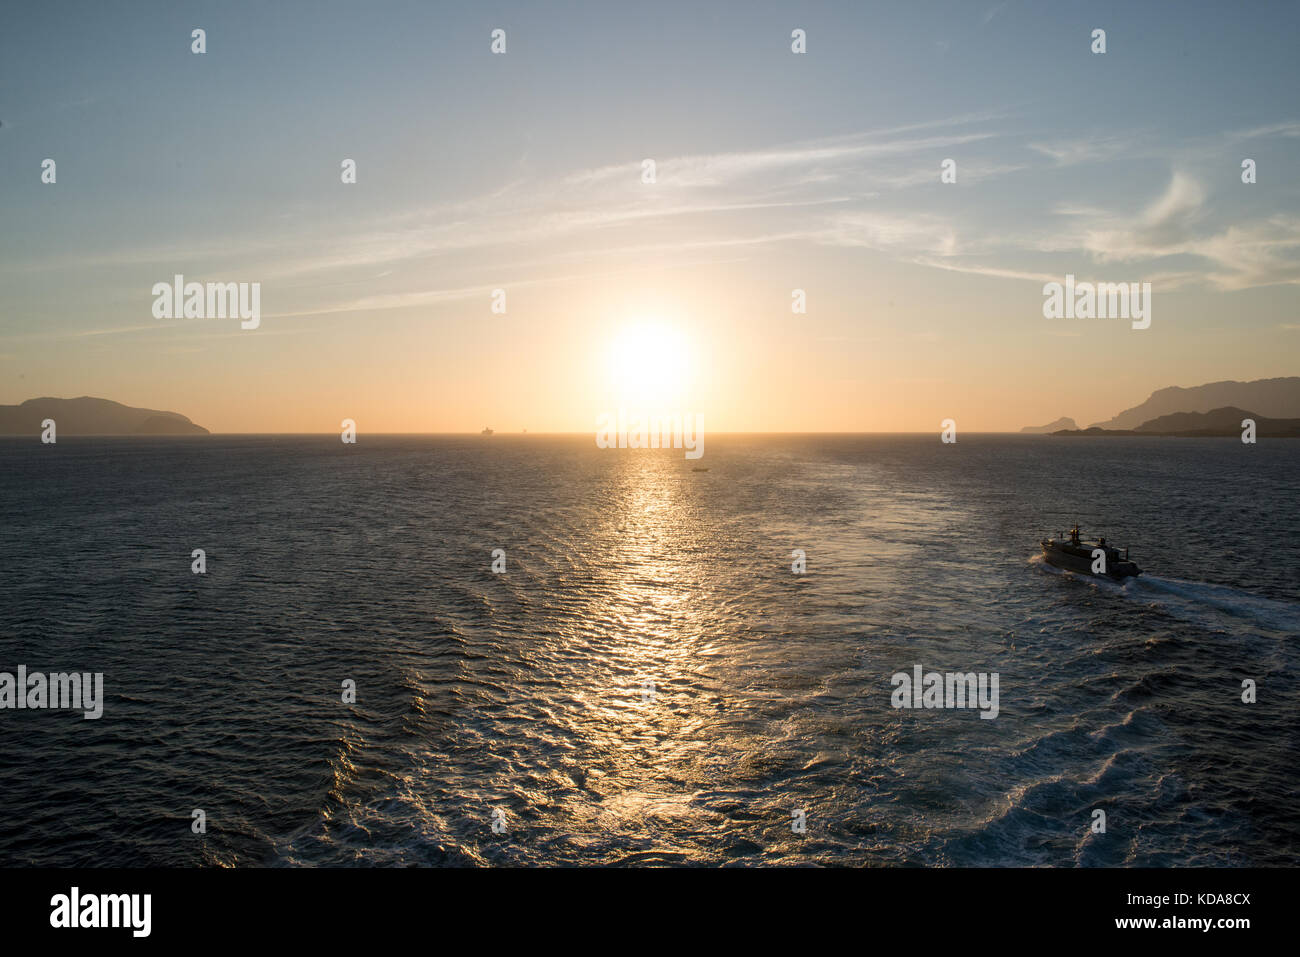 Segeln im Mittelmeer in Richtung Sonnenuntergang am Horizont Stockfoto